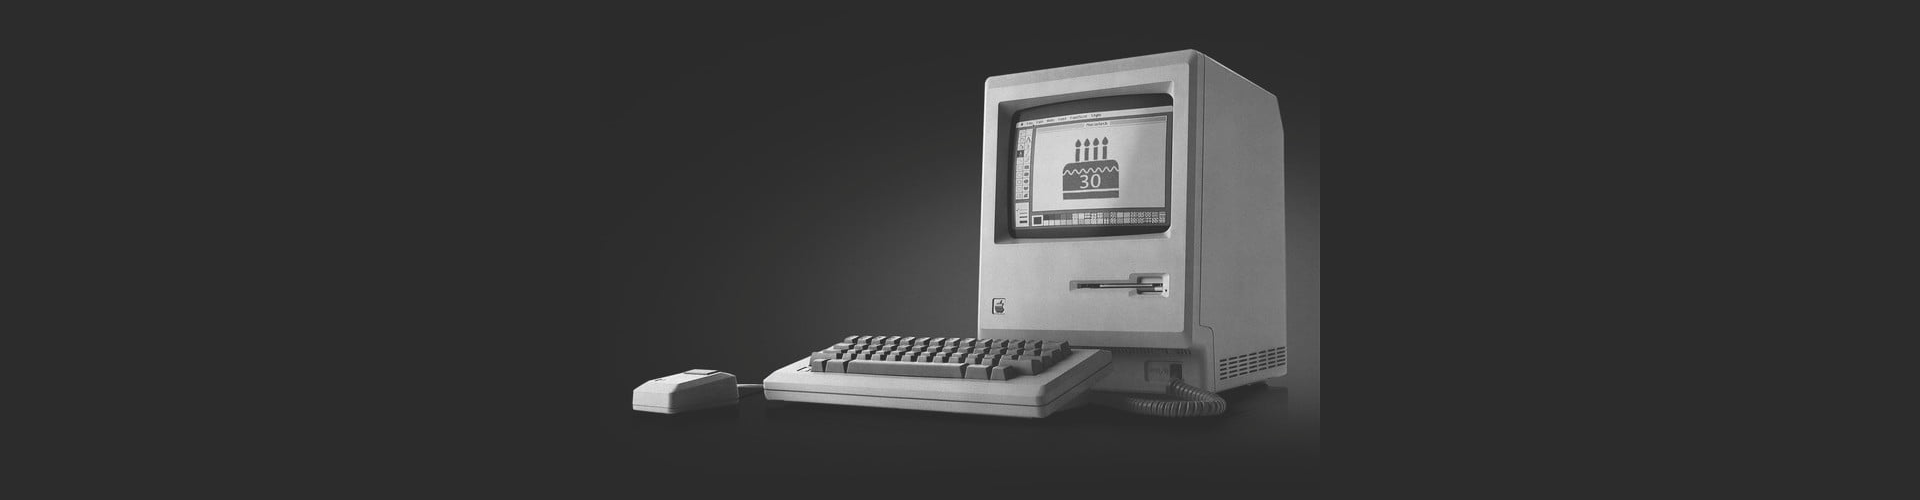 Macintosh 128K Banner